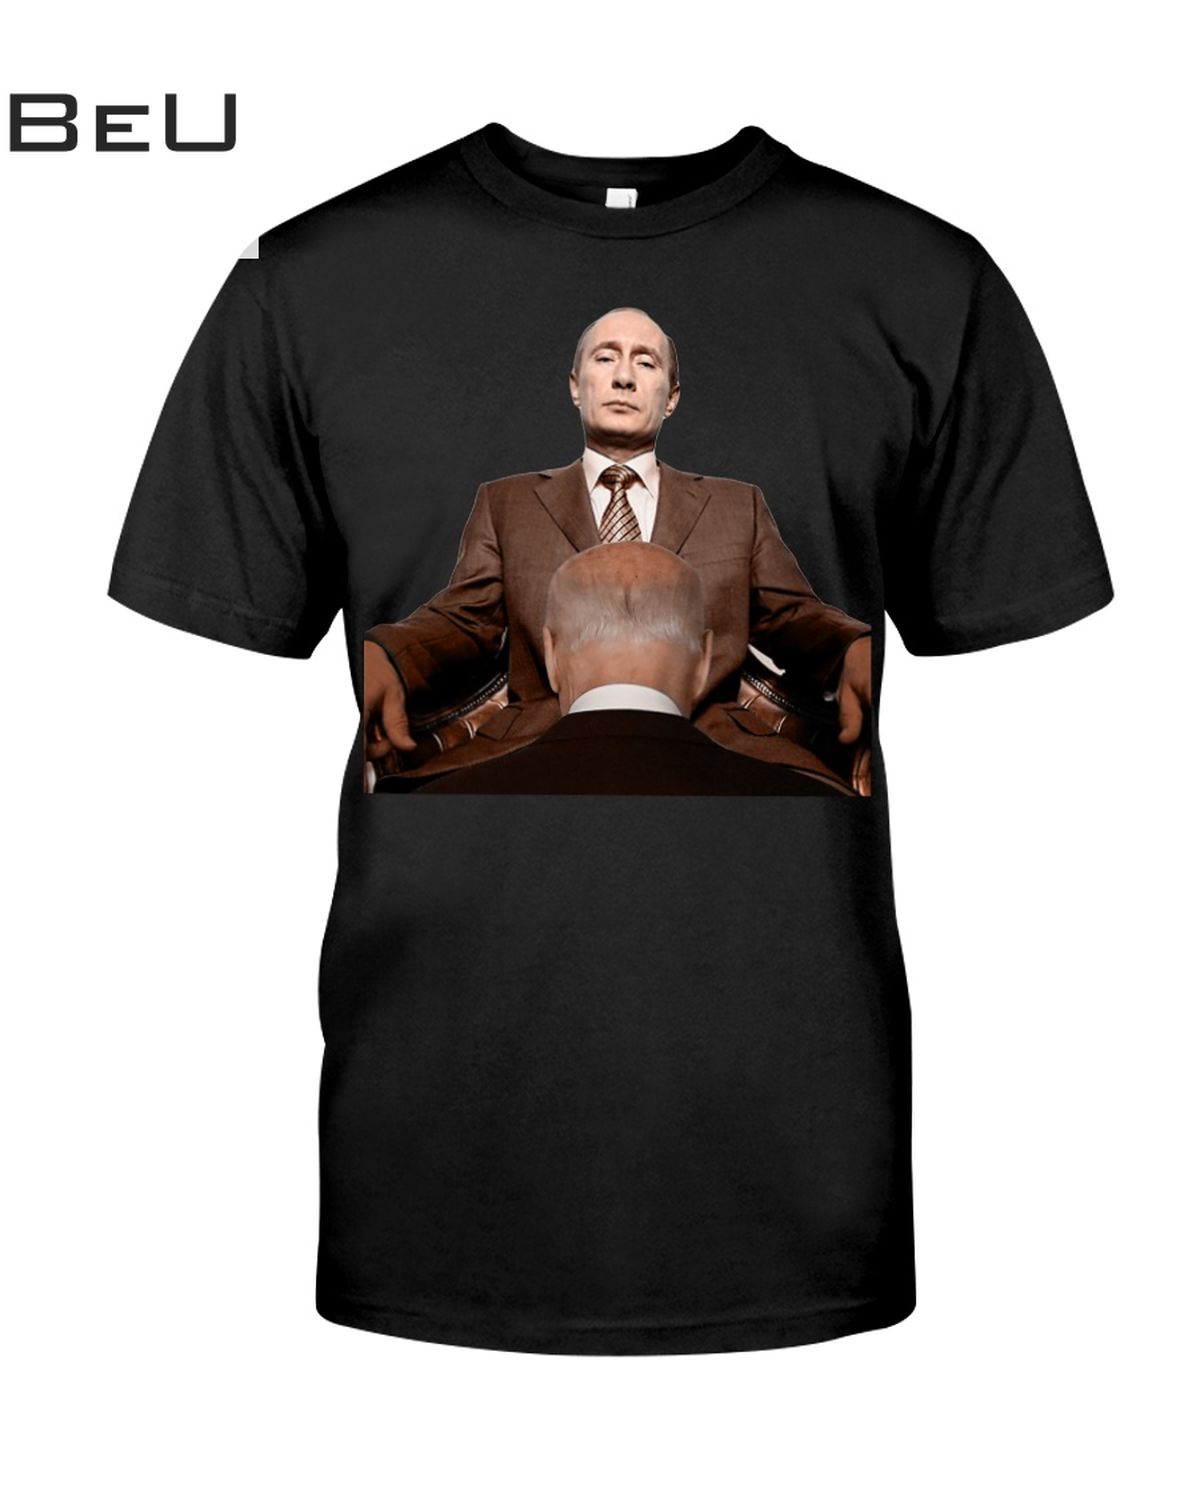 Biden Knee On Putin Shirt